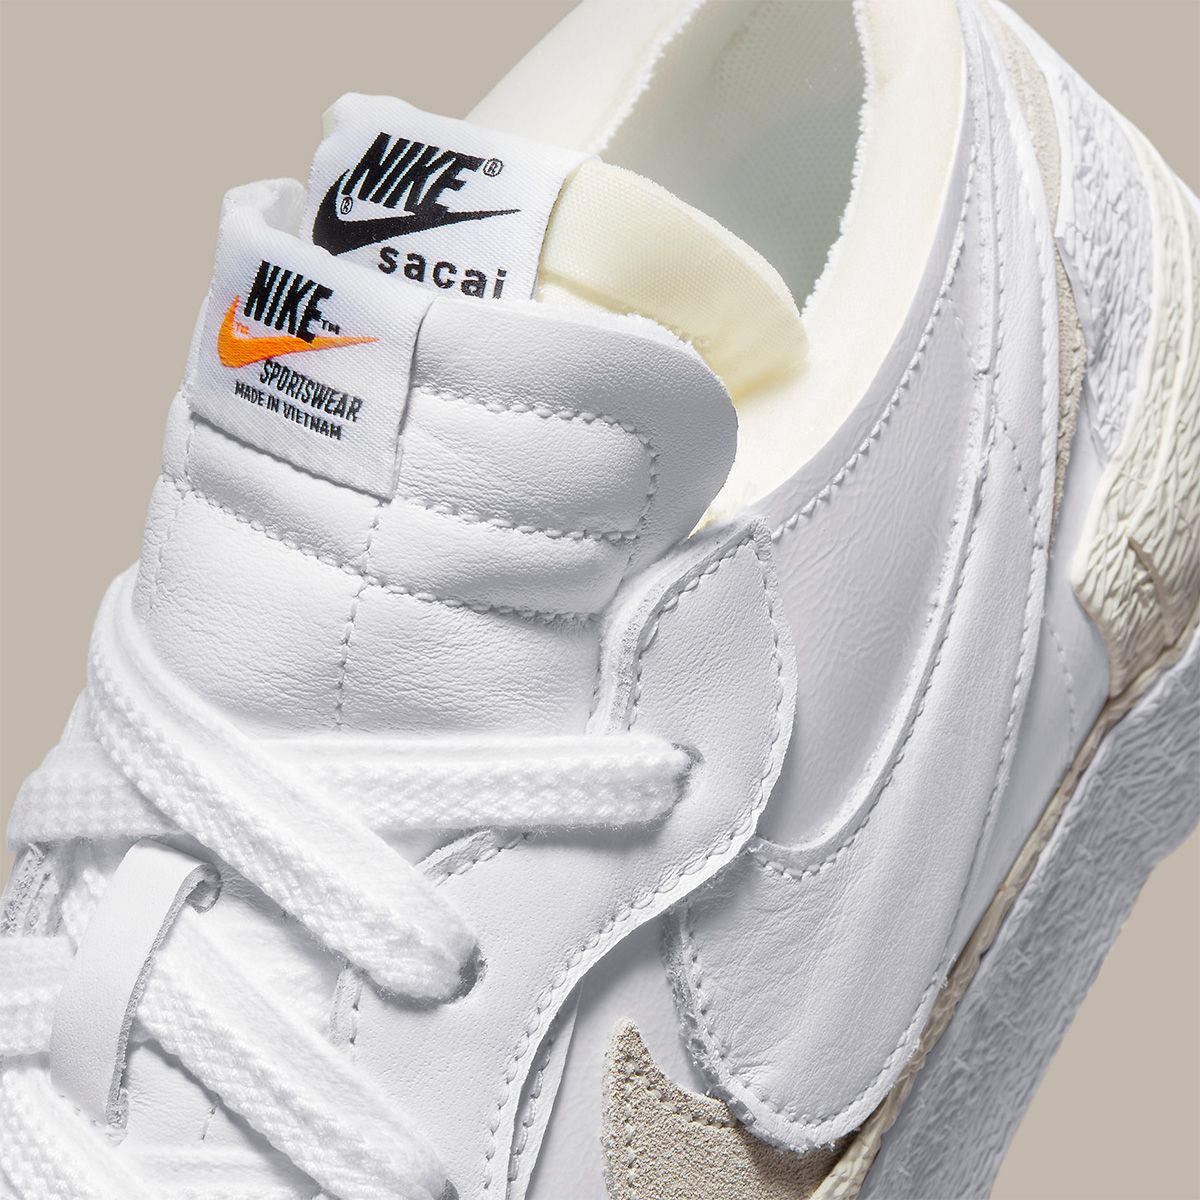 Where to Buy the sacai x Nike Blazer Low “White Patent” | House of Heat°